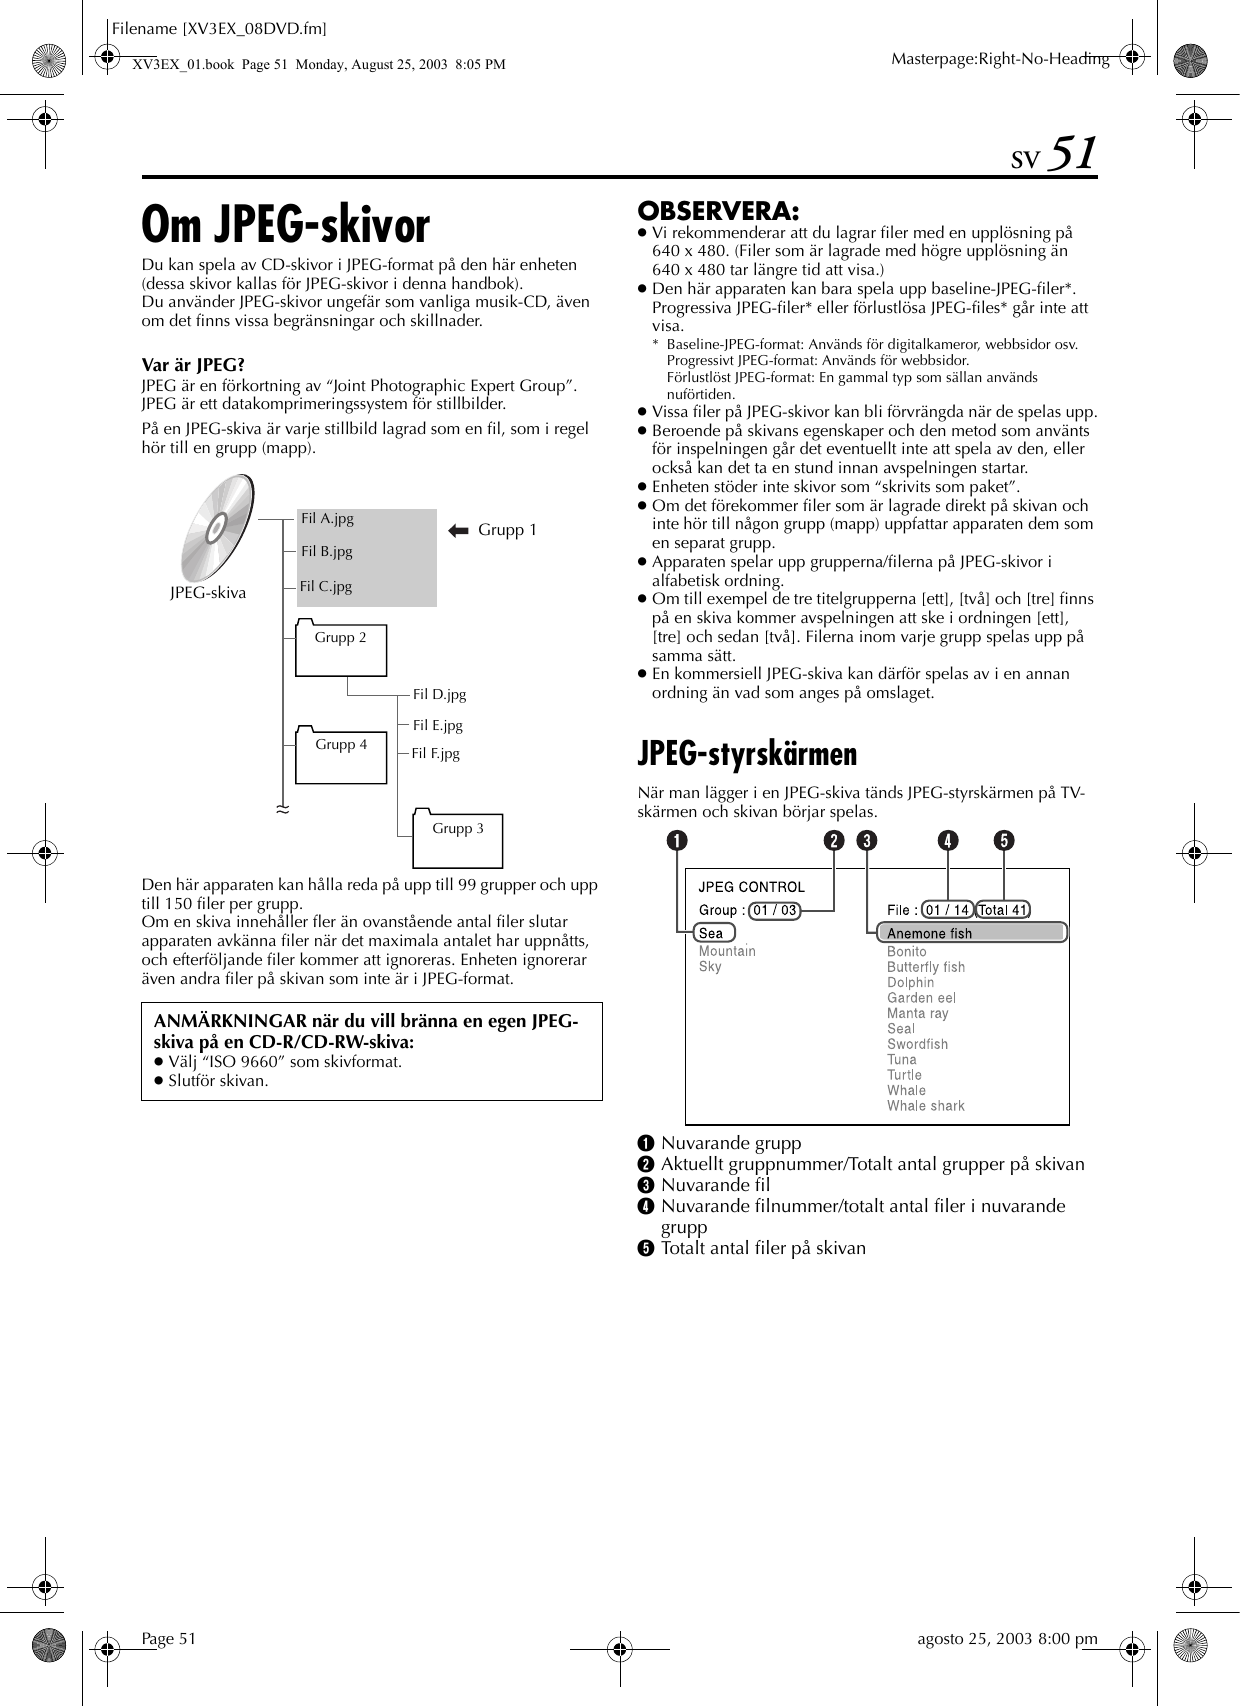 JVC HR XV31E User Manual LPT0880 009A